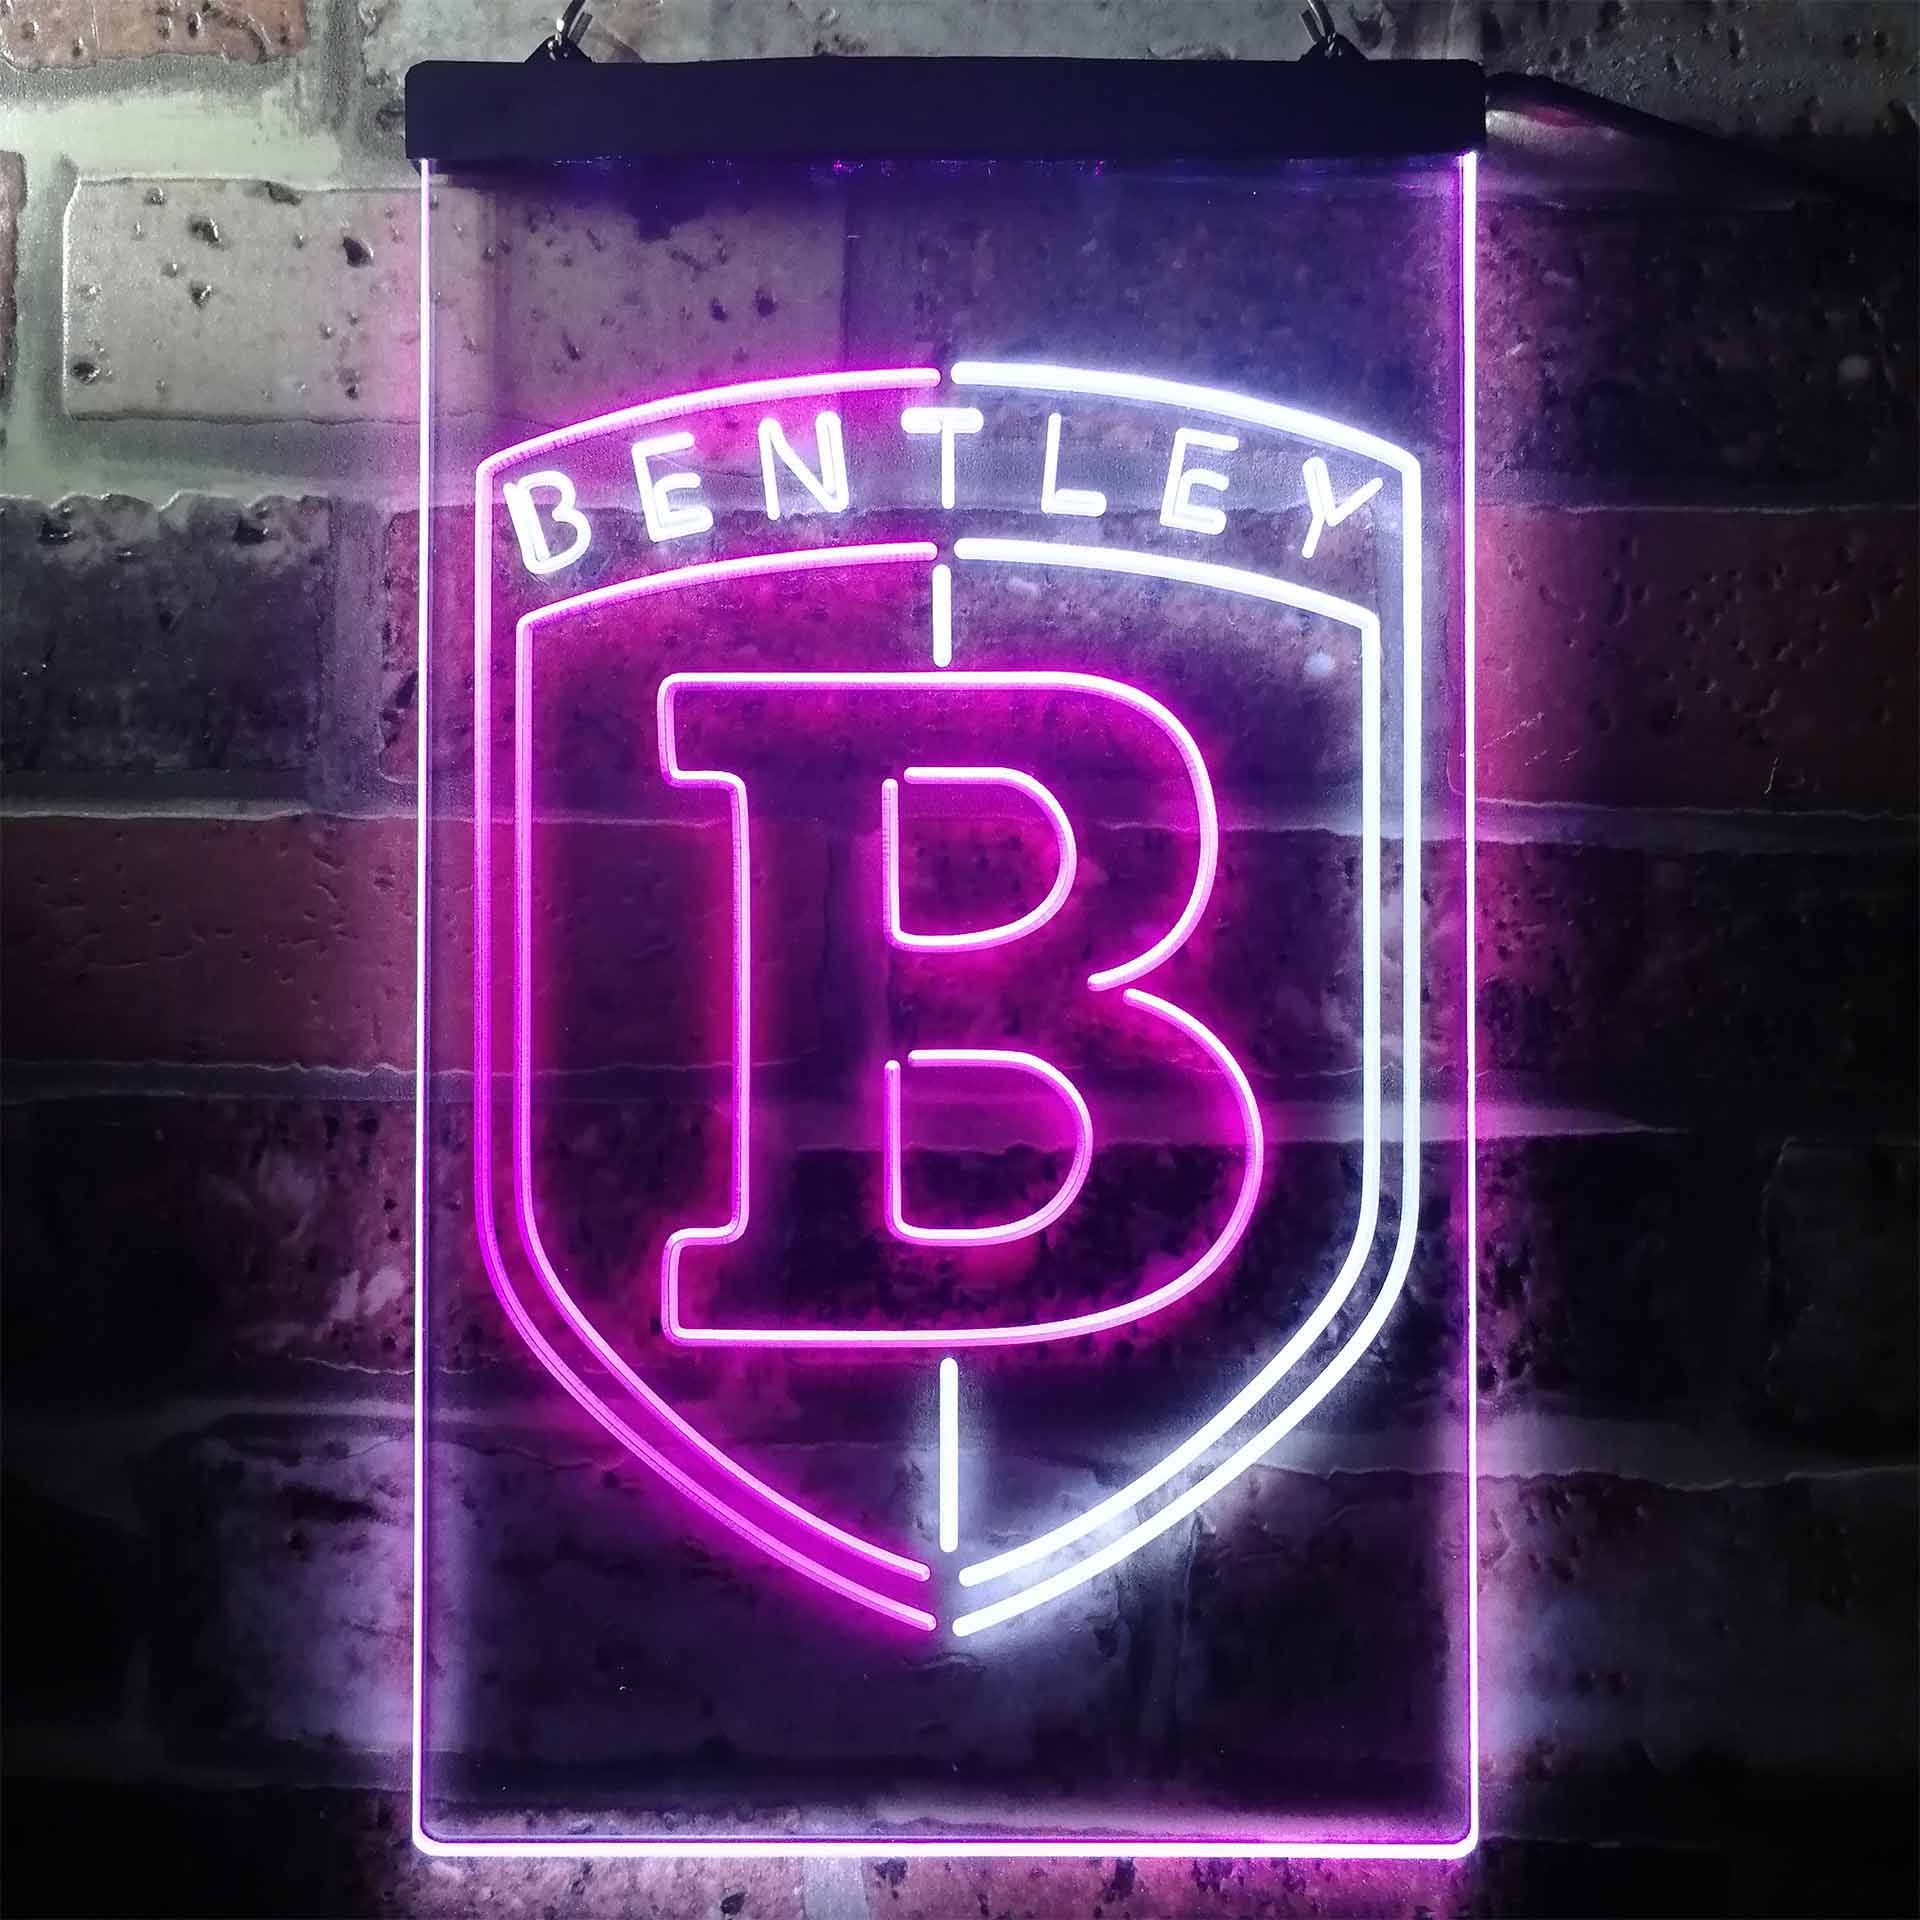 Bentley Car Neon-Like LED Sign